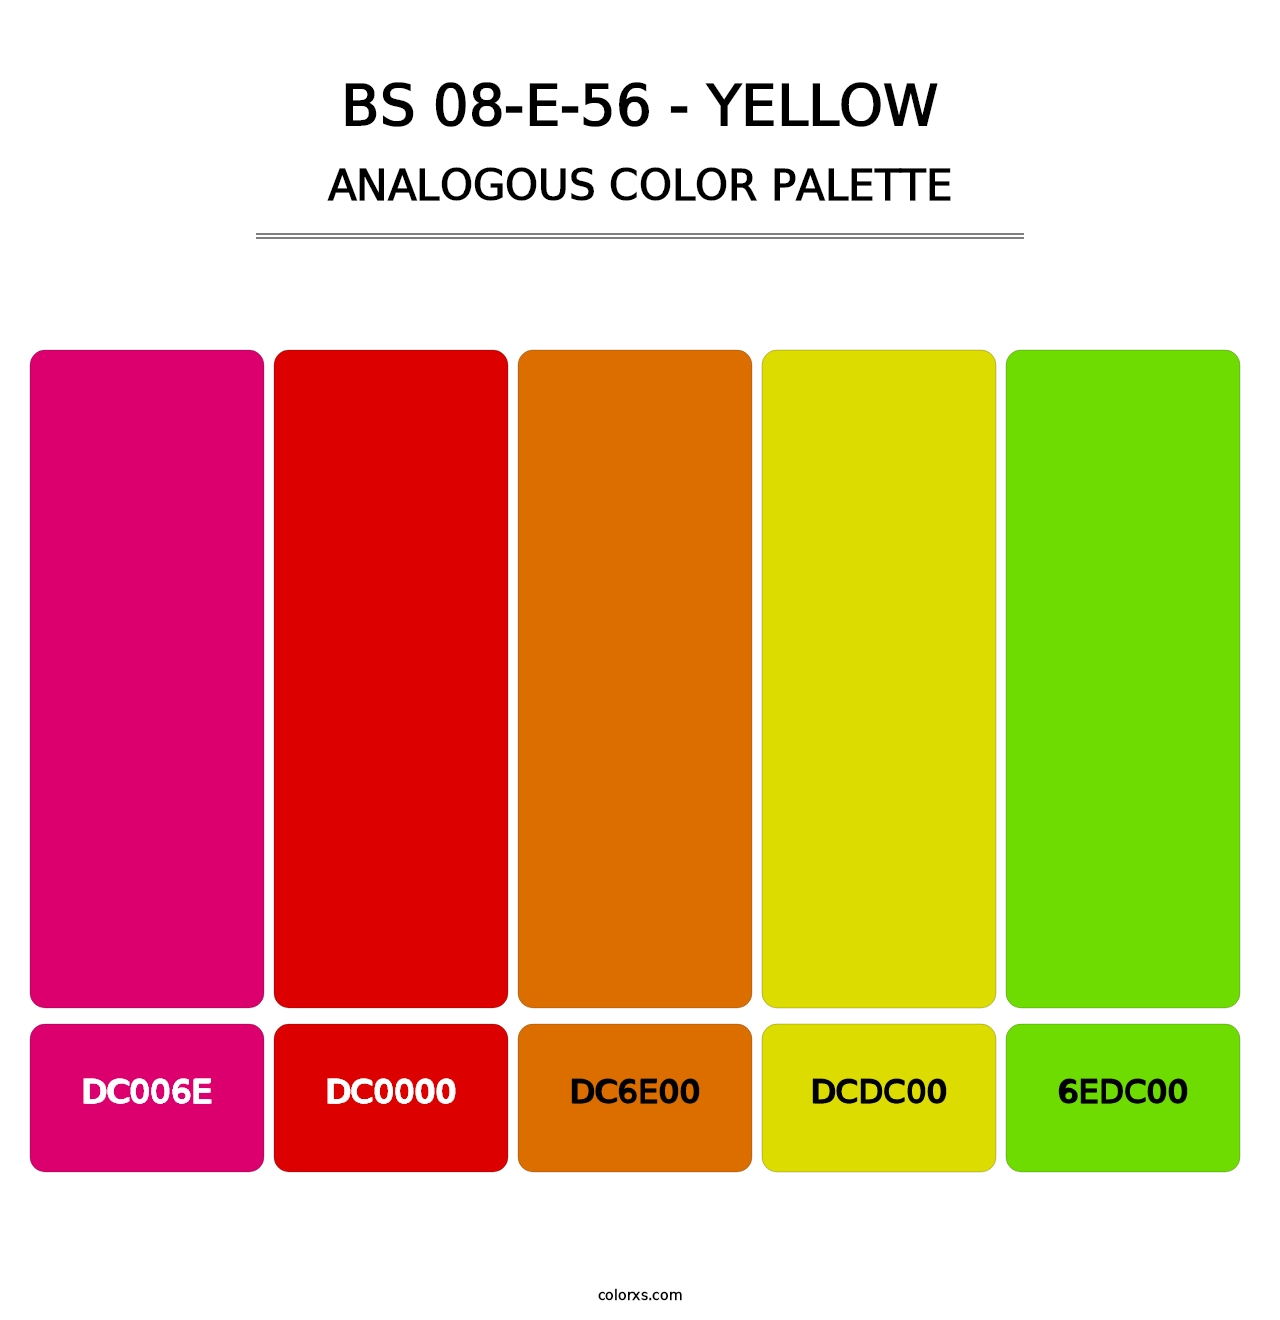 BS 08-E-56 - Yellow - Analogous Color Palette